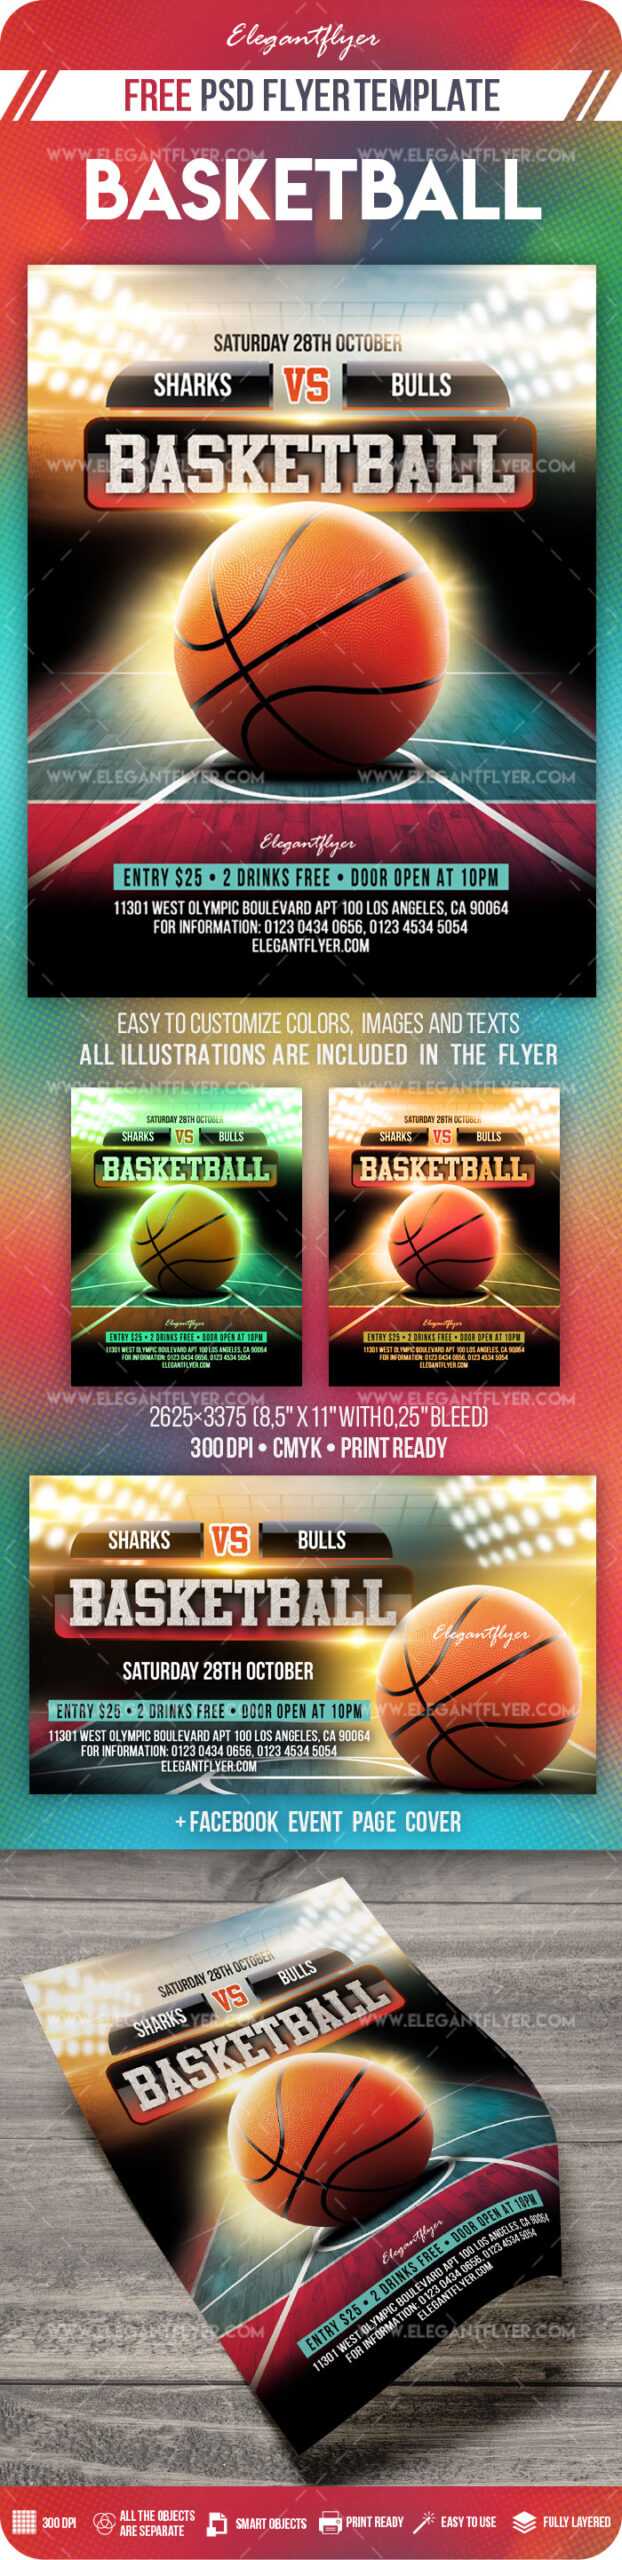 015 Basketball Camp Brochure Template Free Bigpreview Flyer Pertaining To Basketball Camp Brochure Template